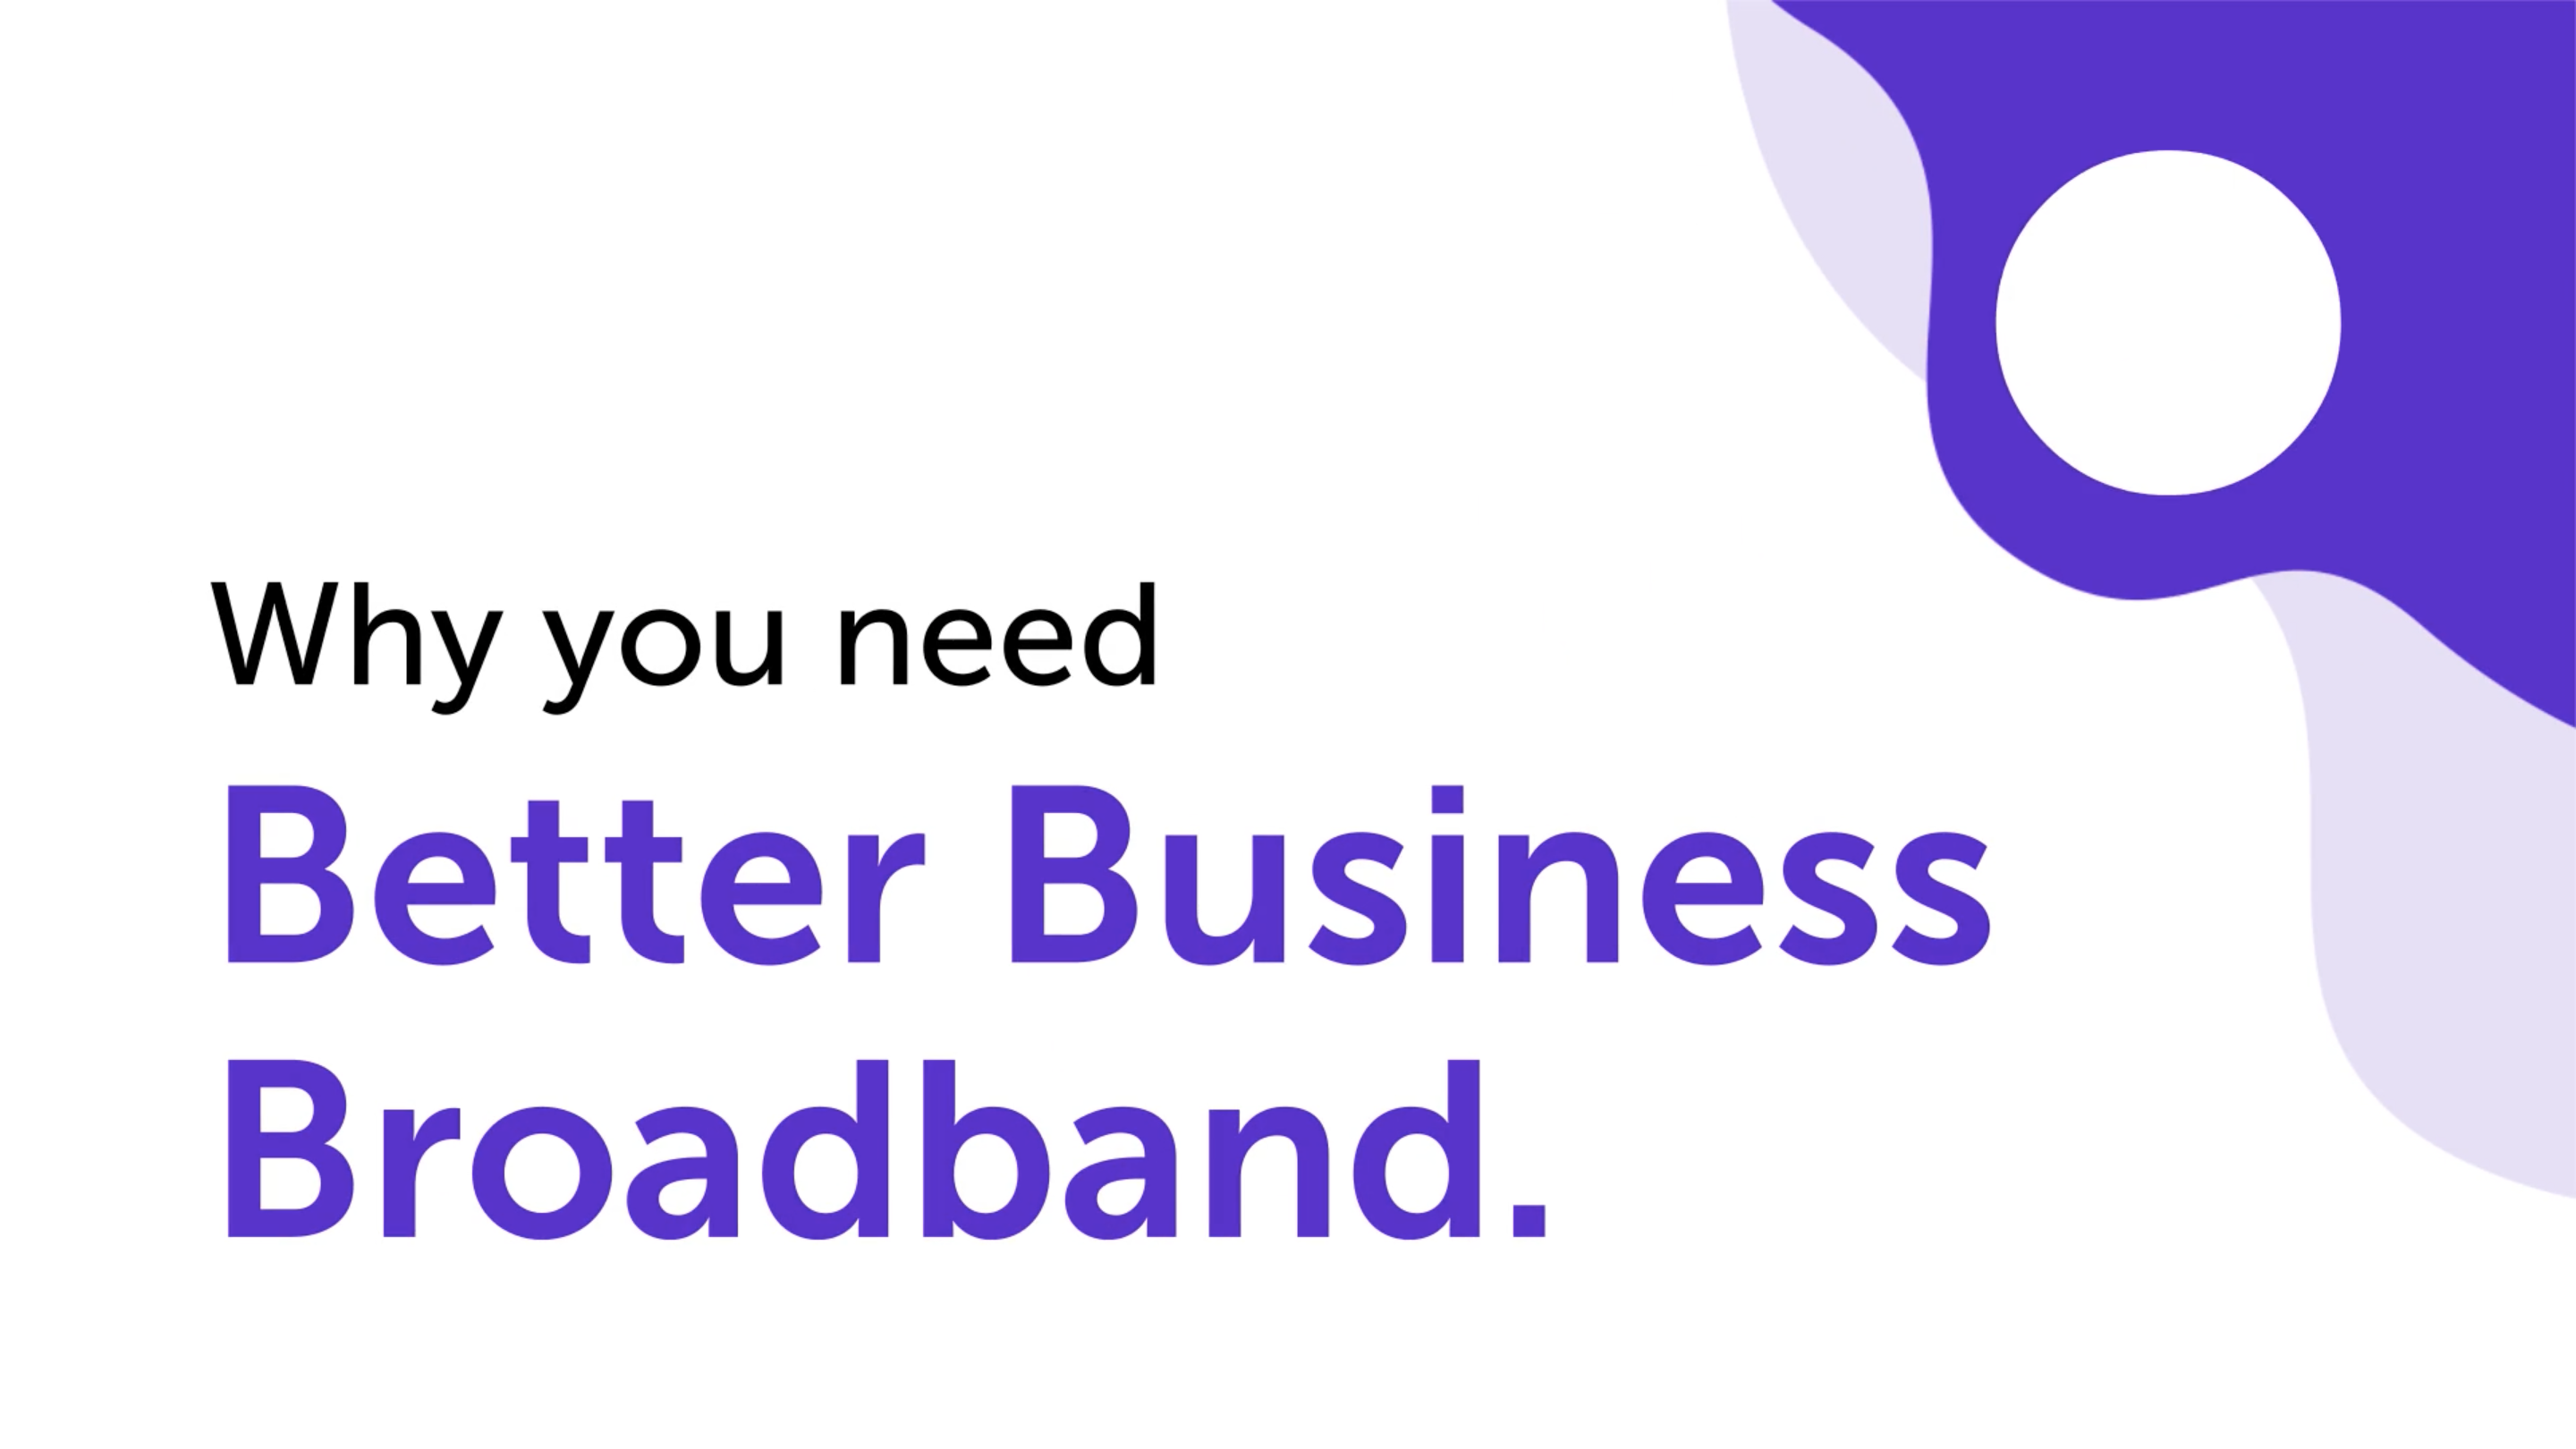 Better Business Broadband